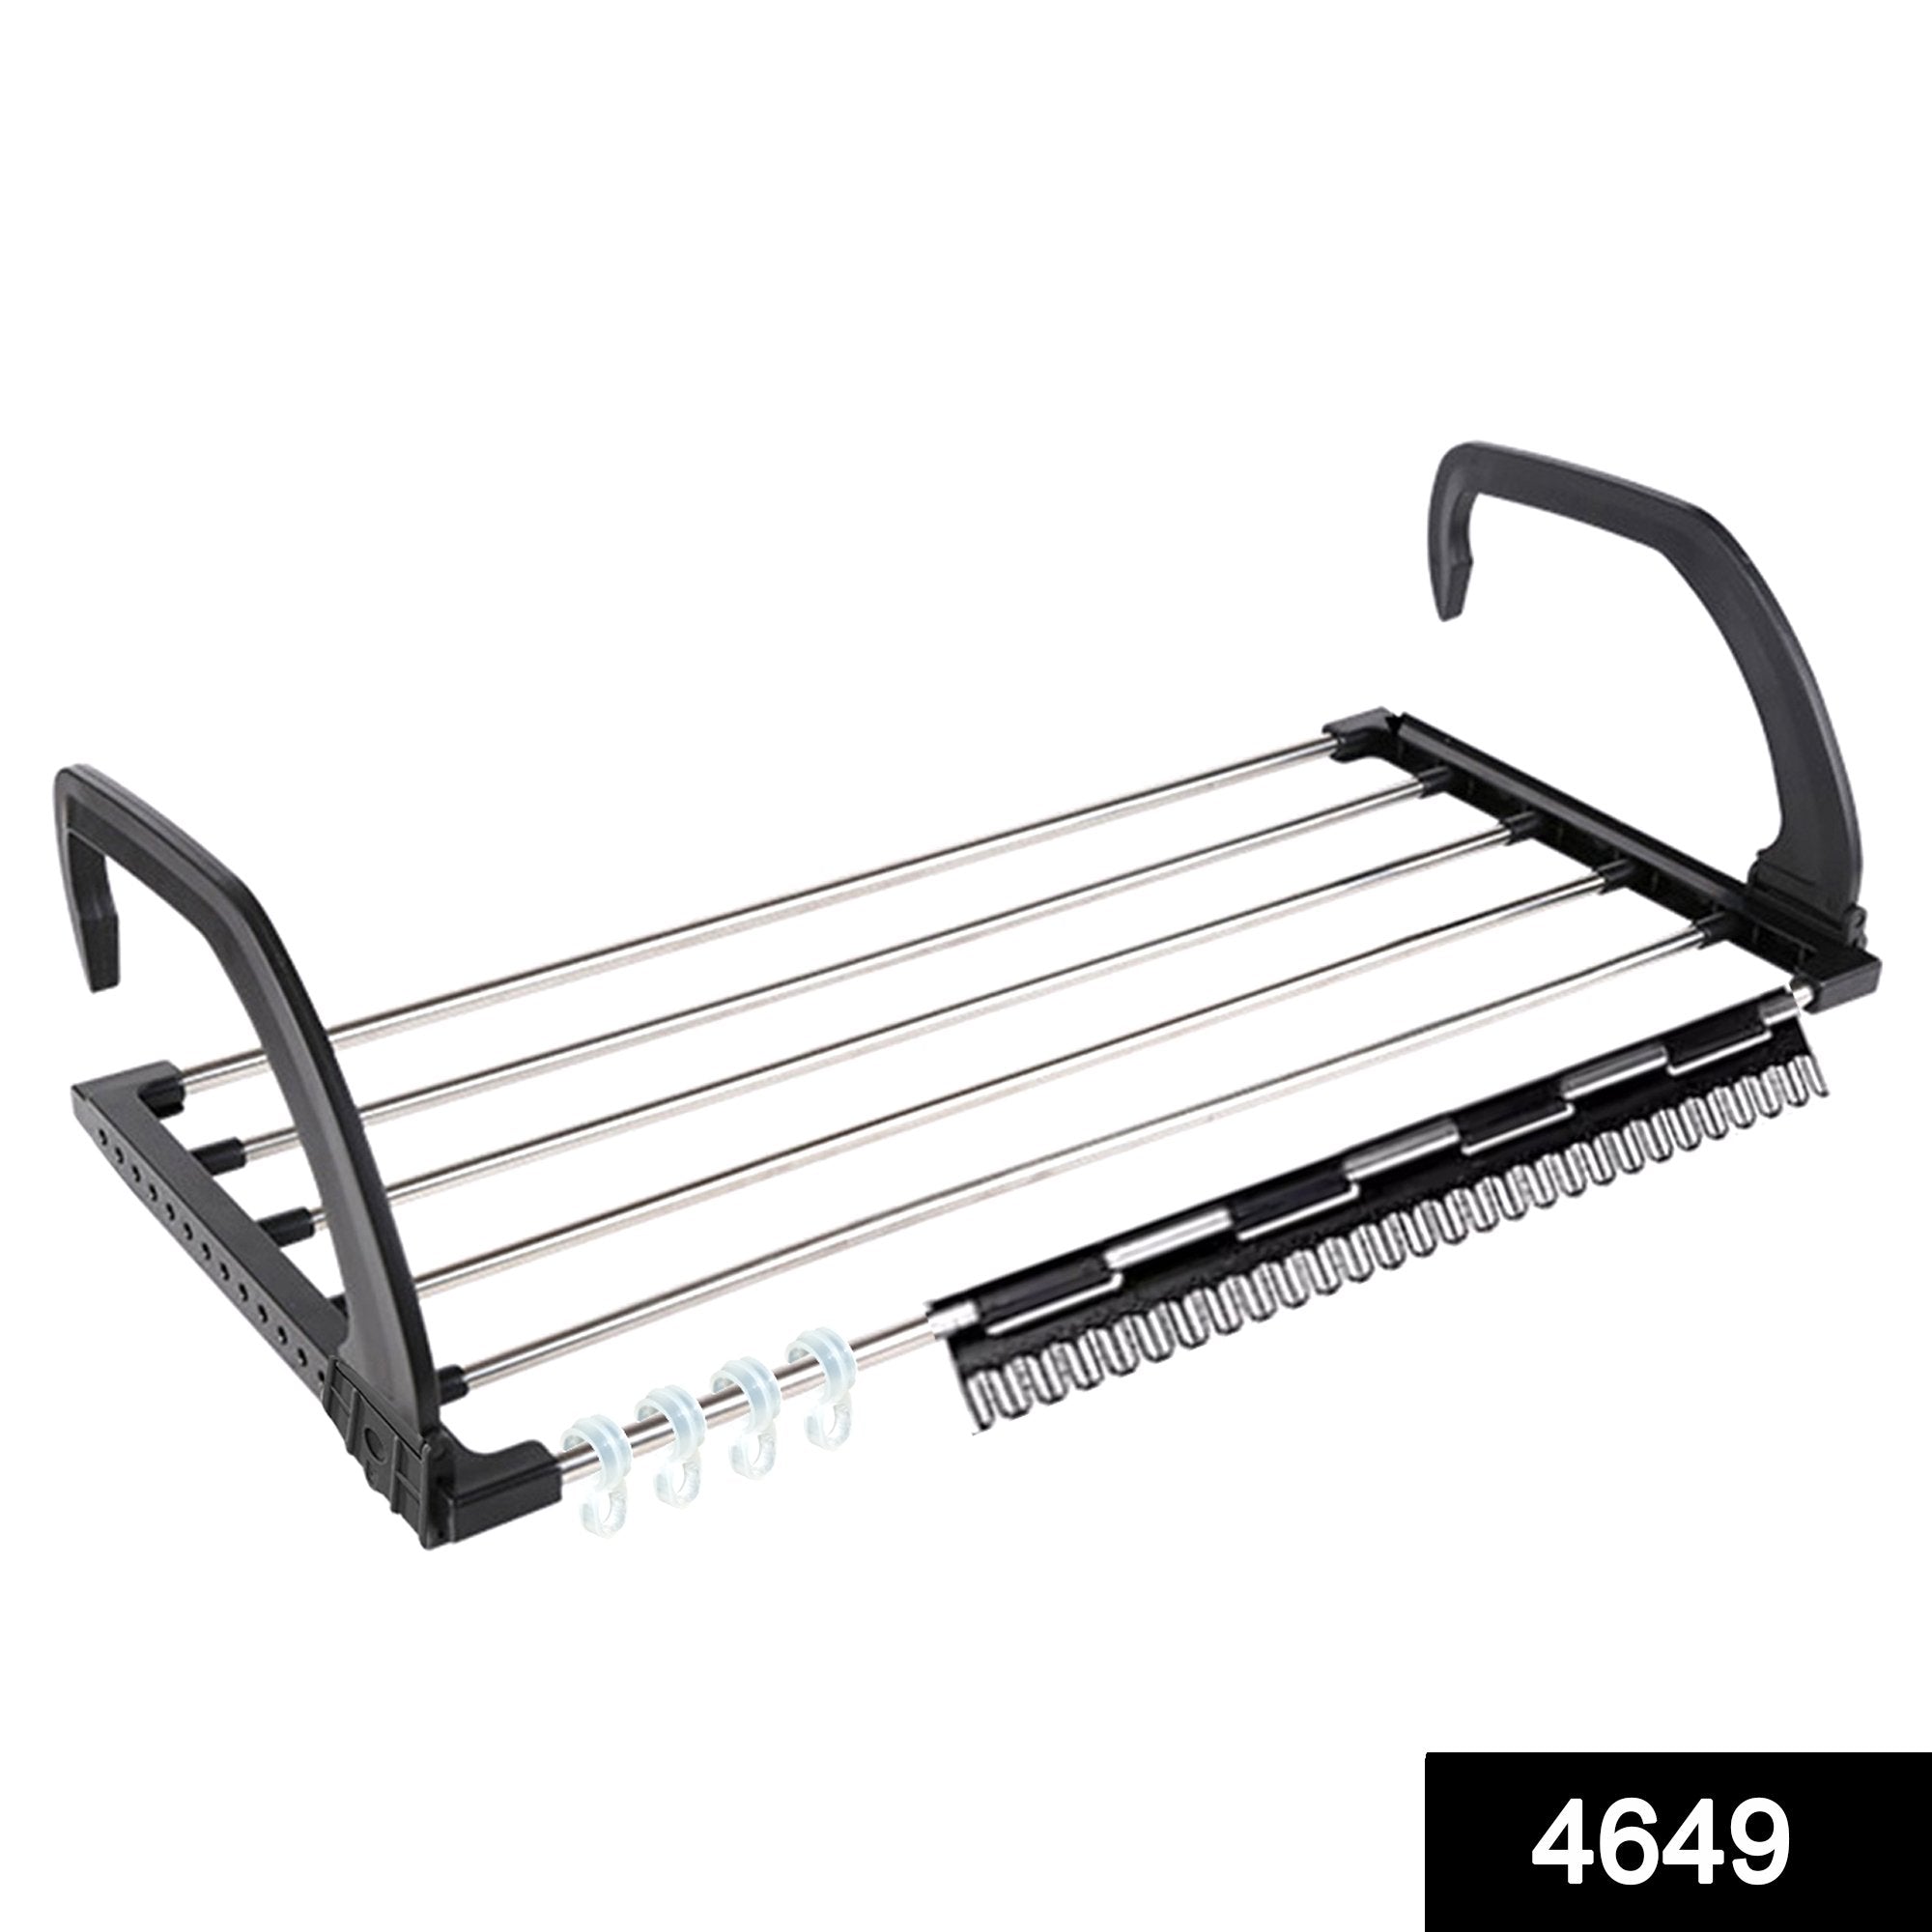 4649 Adjustable Folding Clothes Drying Racks Hanger Shelf